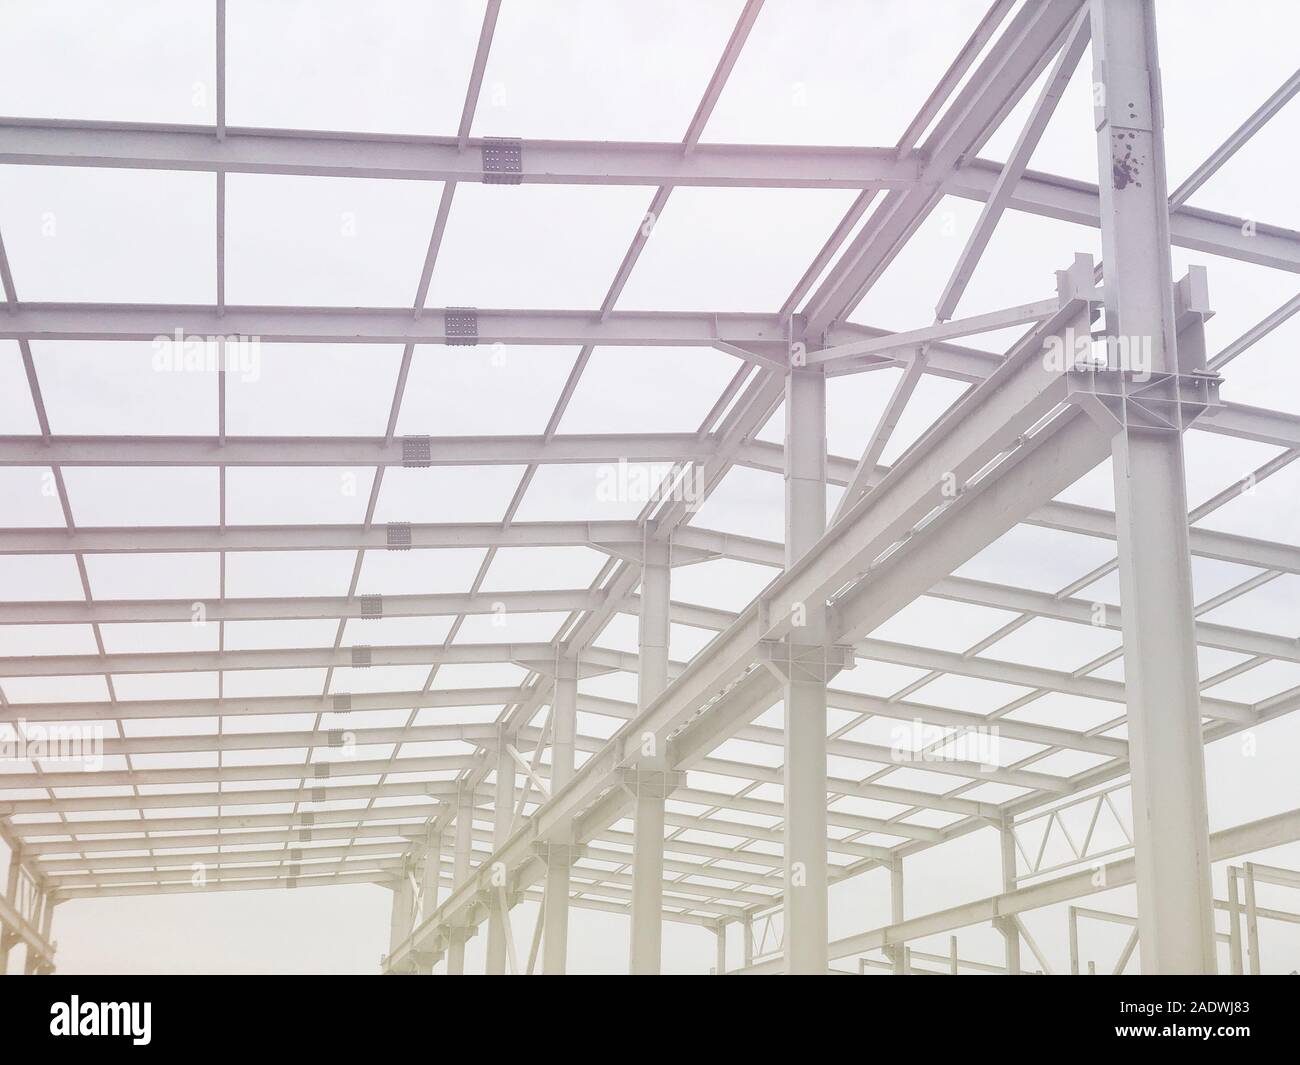 Metal frame of prefabricated multi-storey building. Metal pillars, beams and diagonal bracings Stock Photo